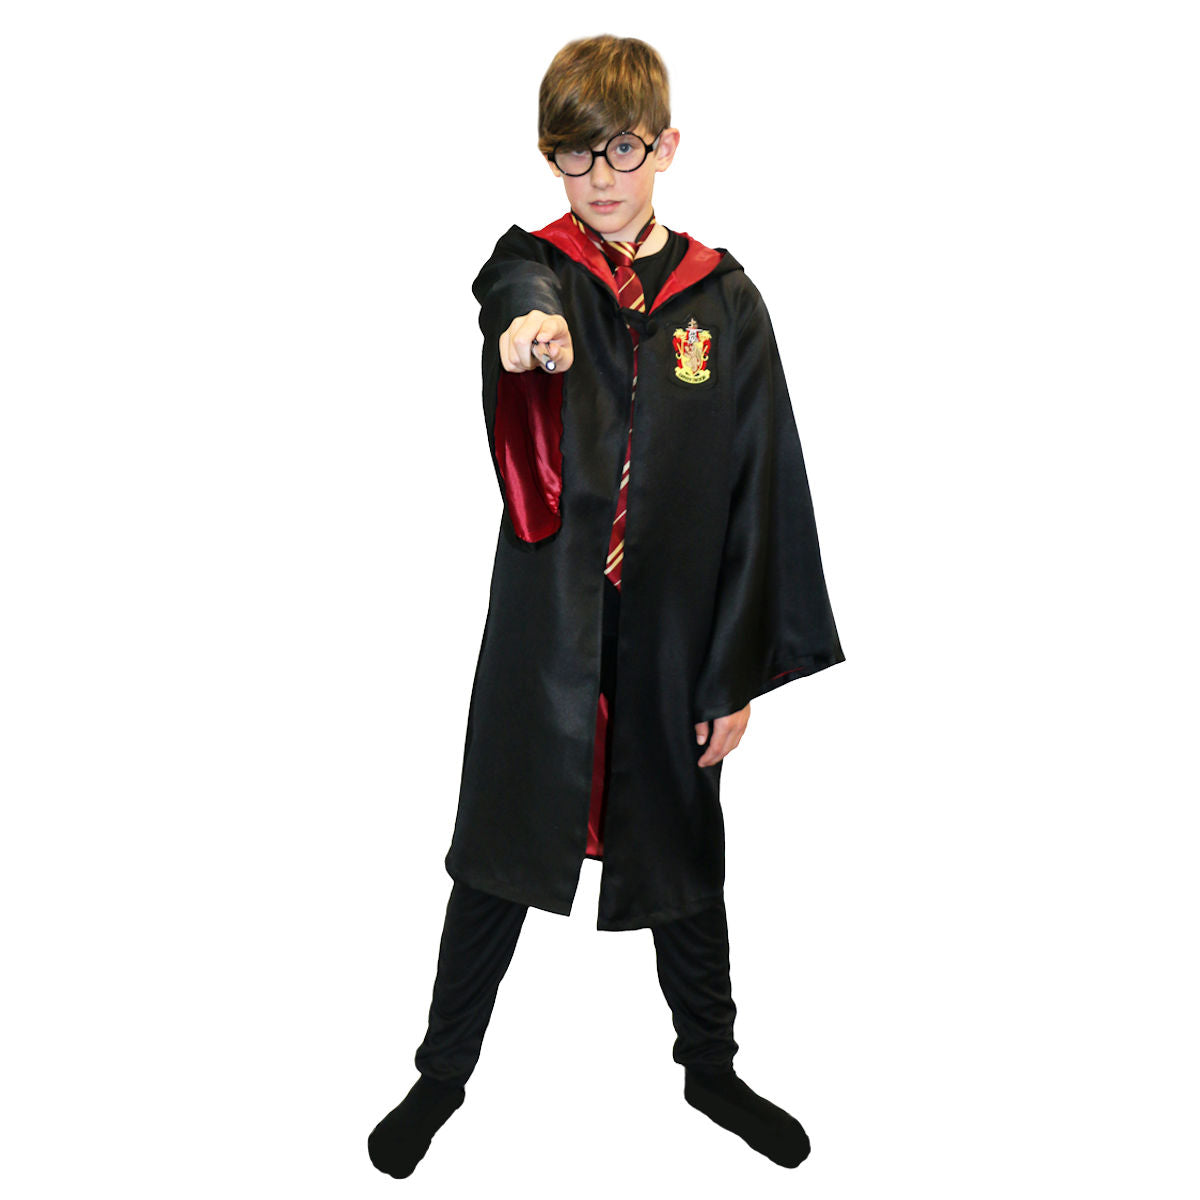 Harry Potter Robe Child Fancy Dress Costume